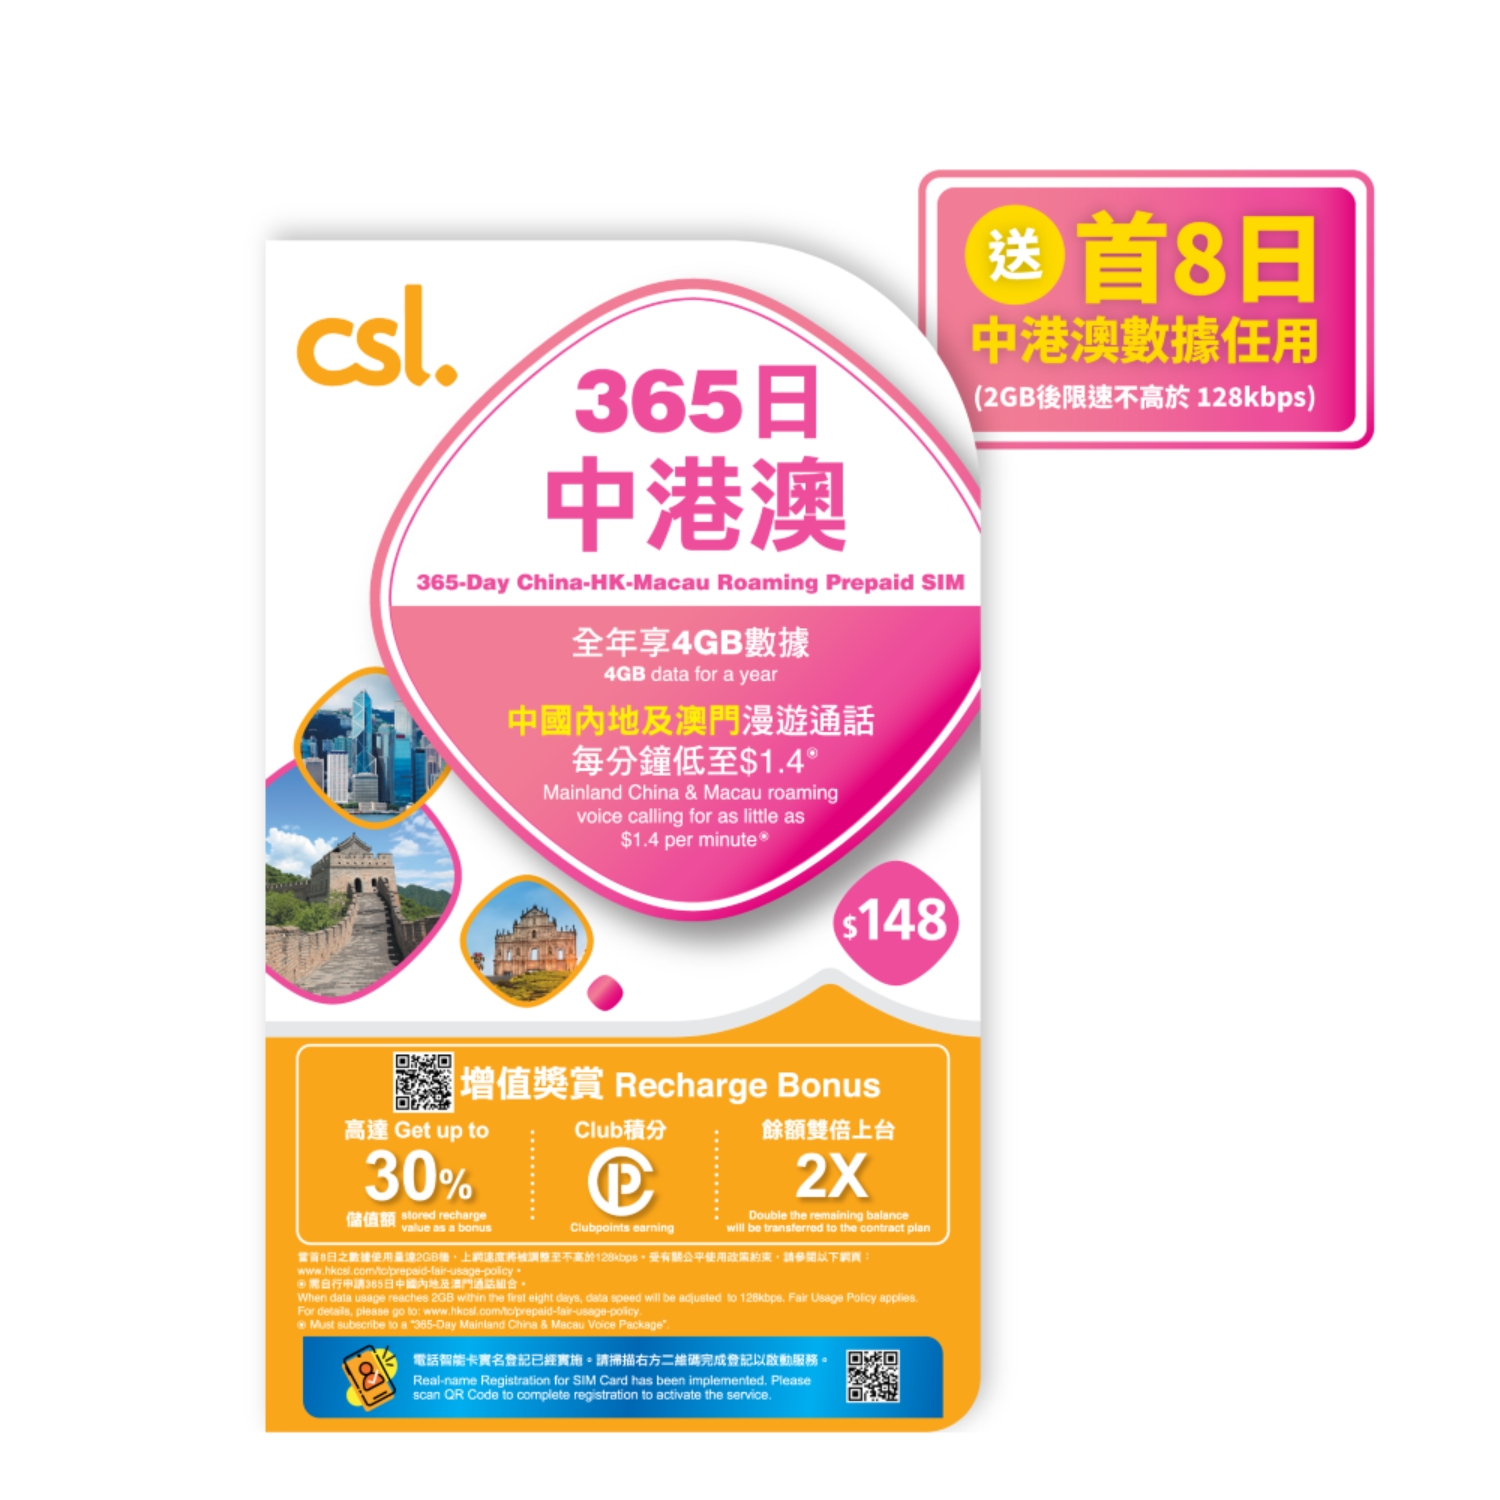 csl. 365-Day China-HK-Macau Roaming Prepaid SIM